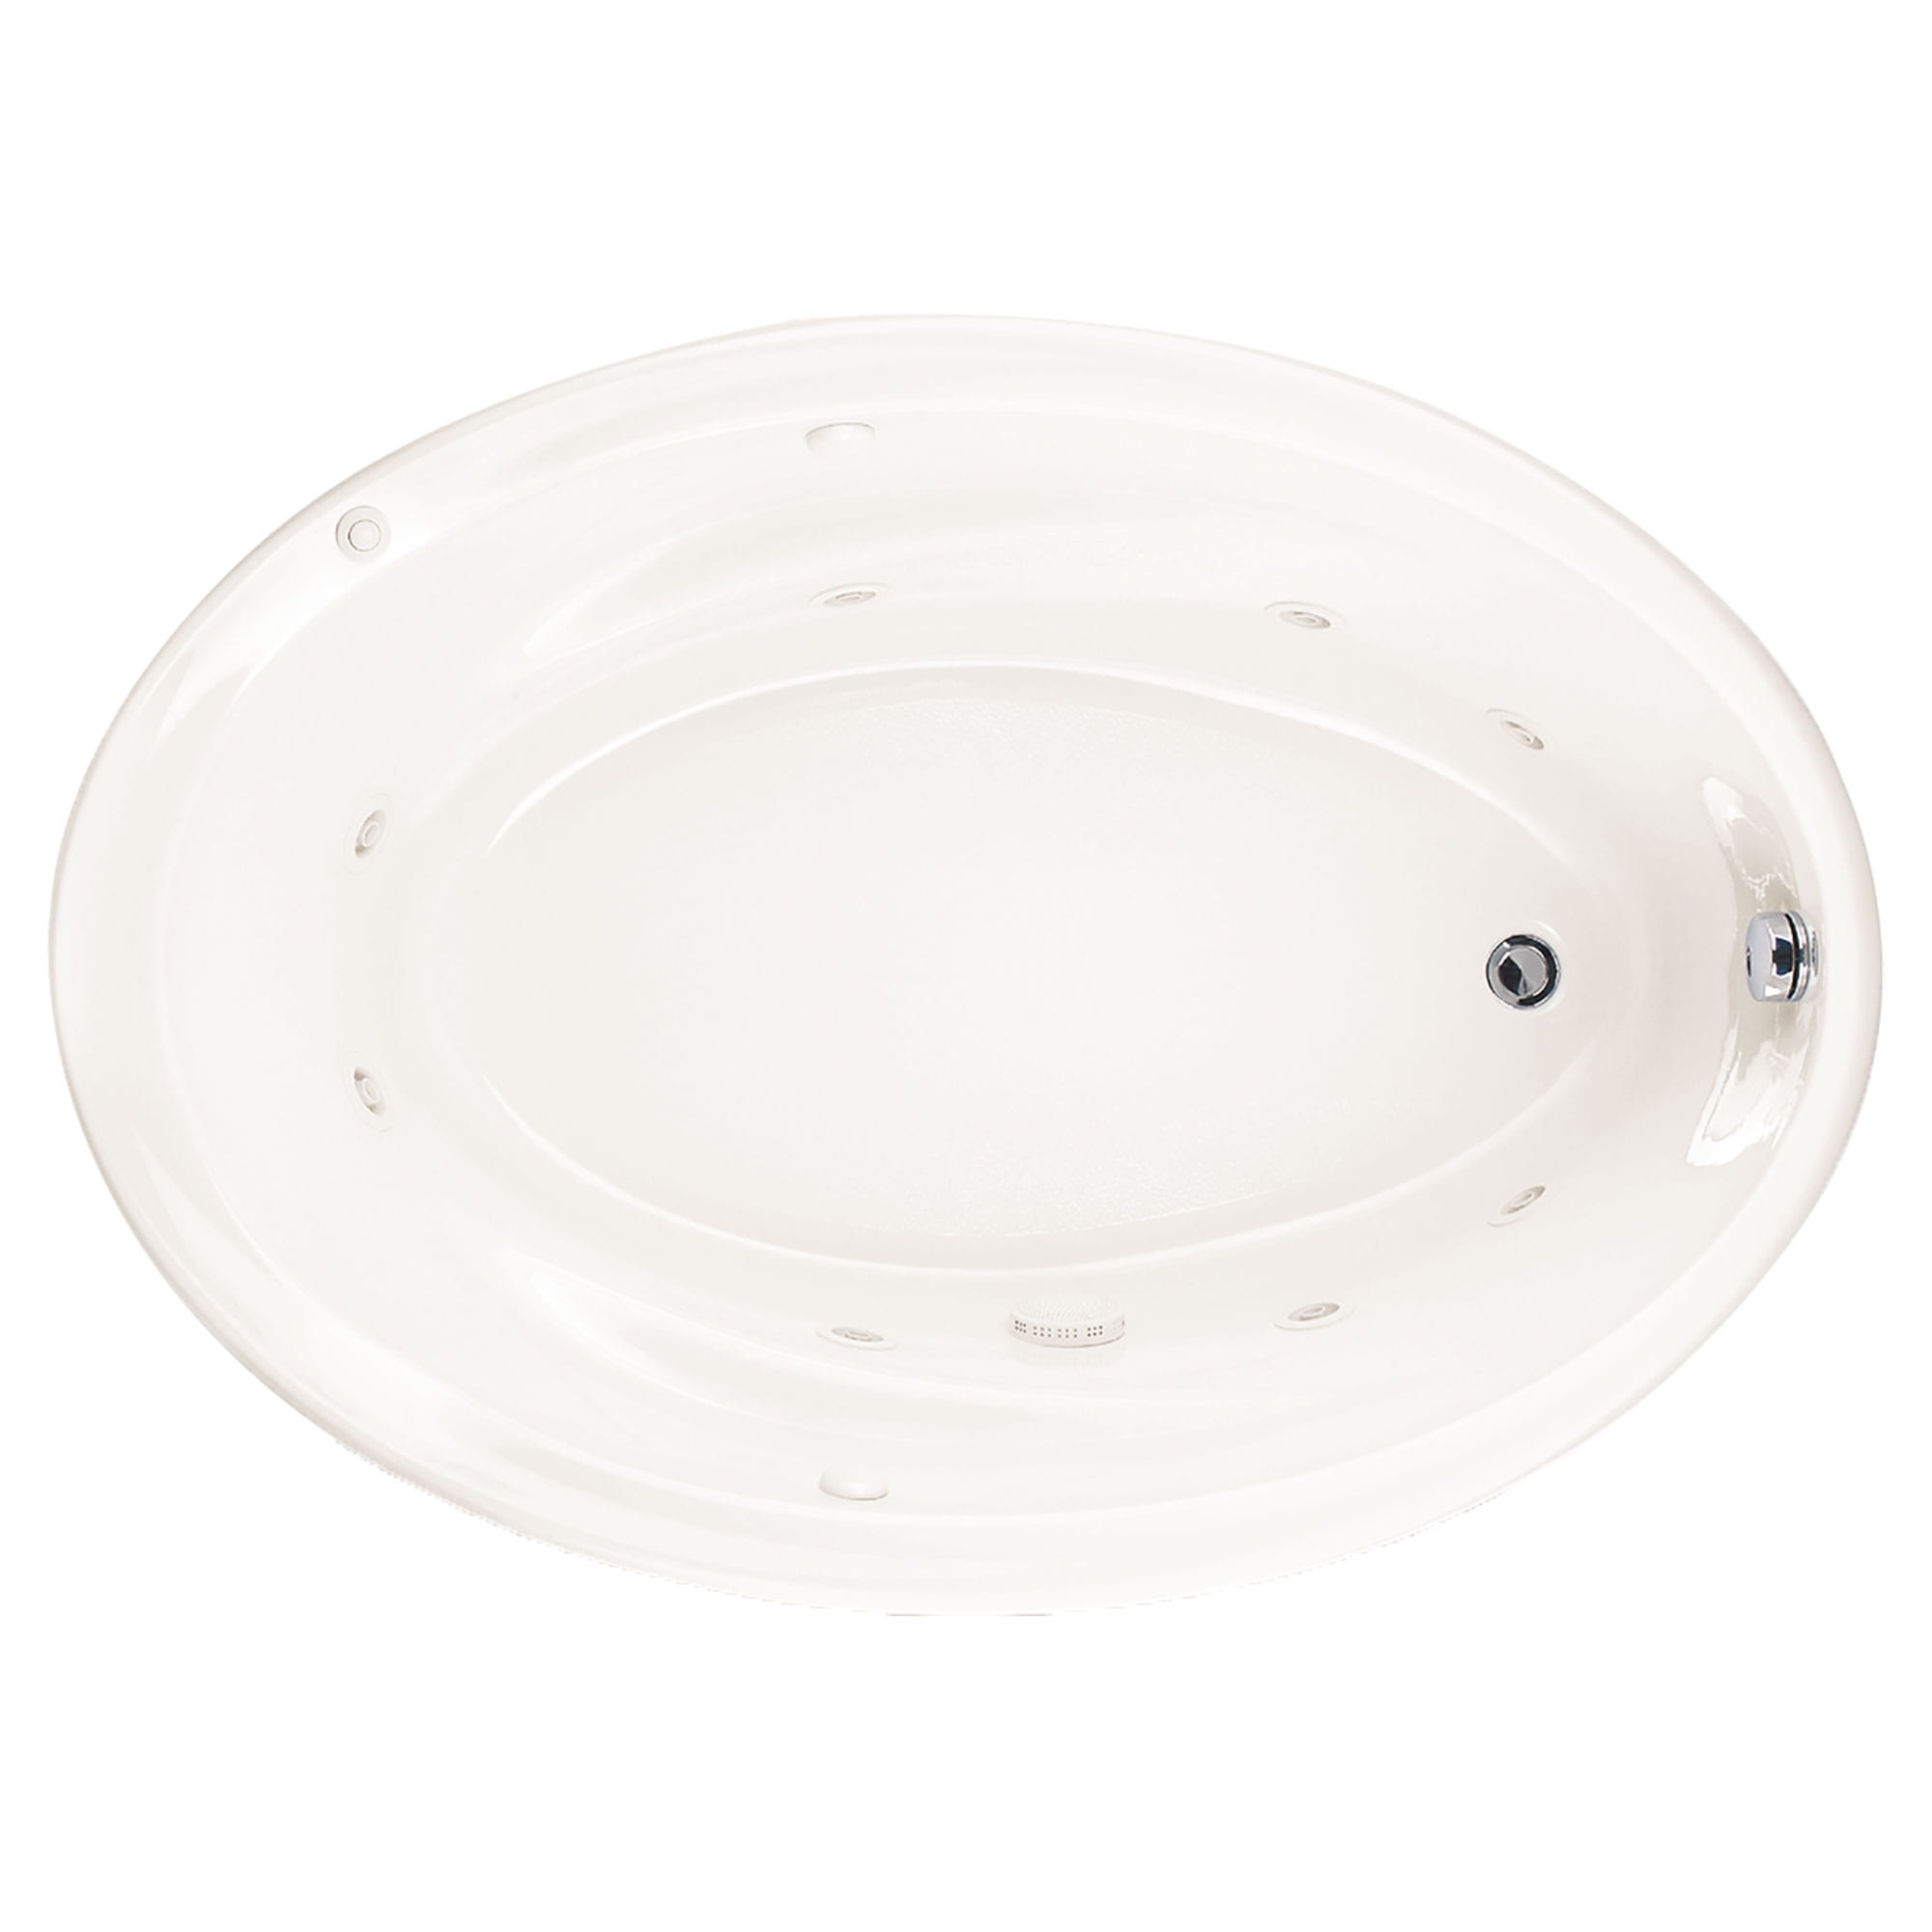 Savona Oval 60 x 42 Inch Drop in Bathtub With EverClean Hydromassage System WHITE